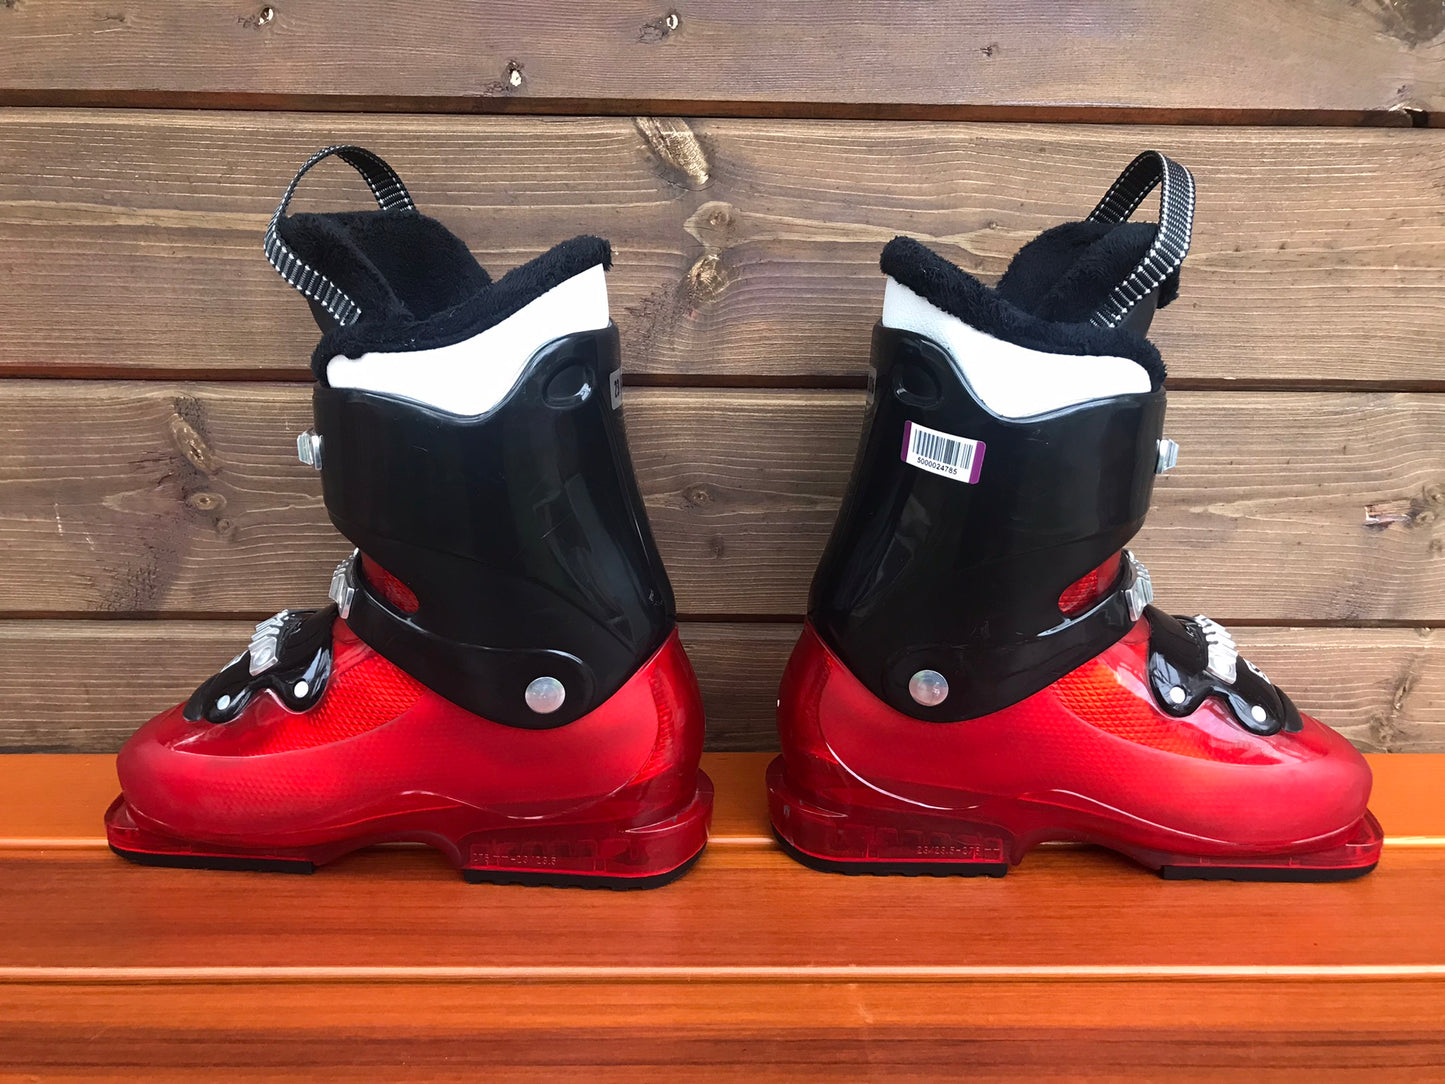 Ski Boots Mondo Size 23.0 Child Size 5-6 Size 13  276 mm Salomon Black Red White New Demo Model